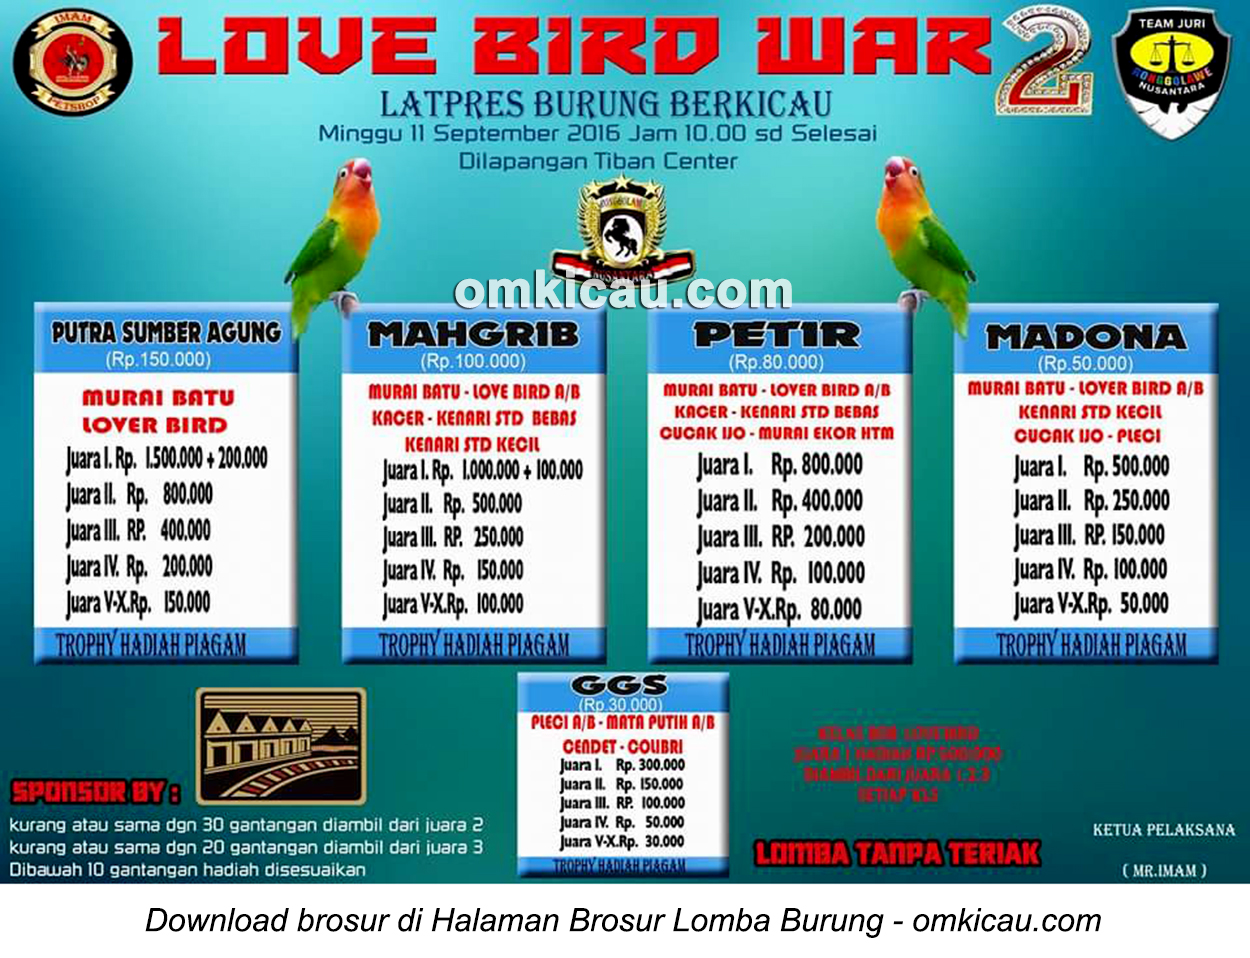 Brosur Latpres Burung Berkicau Love Bird War 2, Batam, 11 September 2016